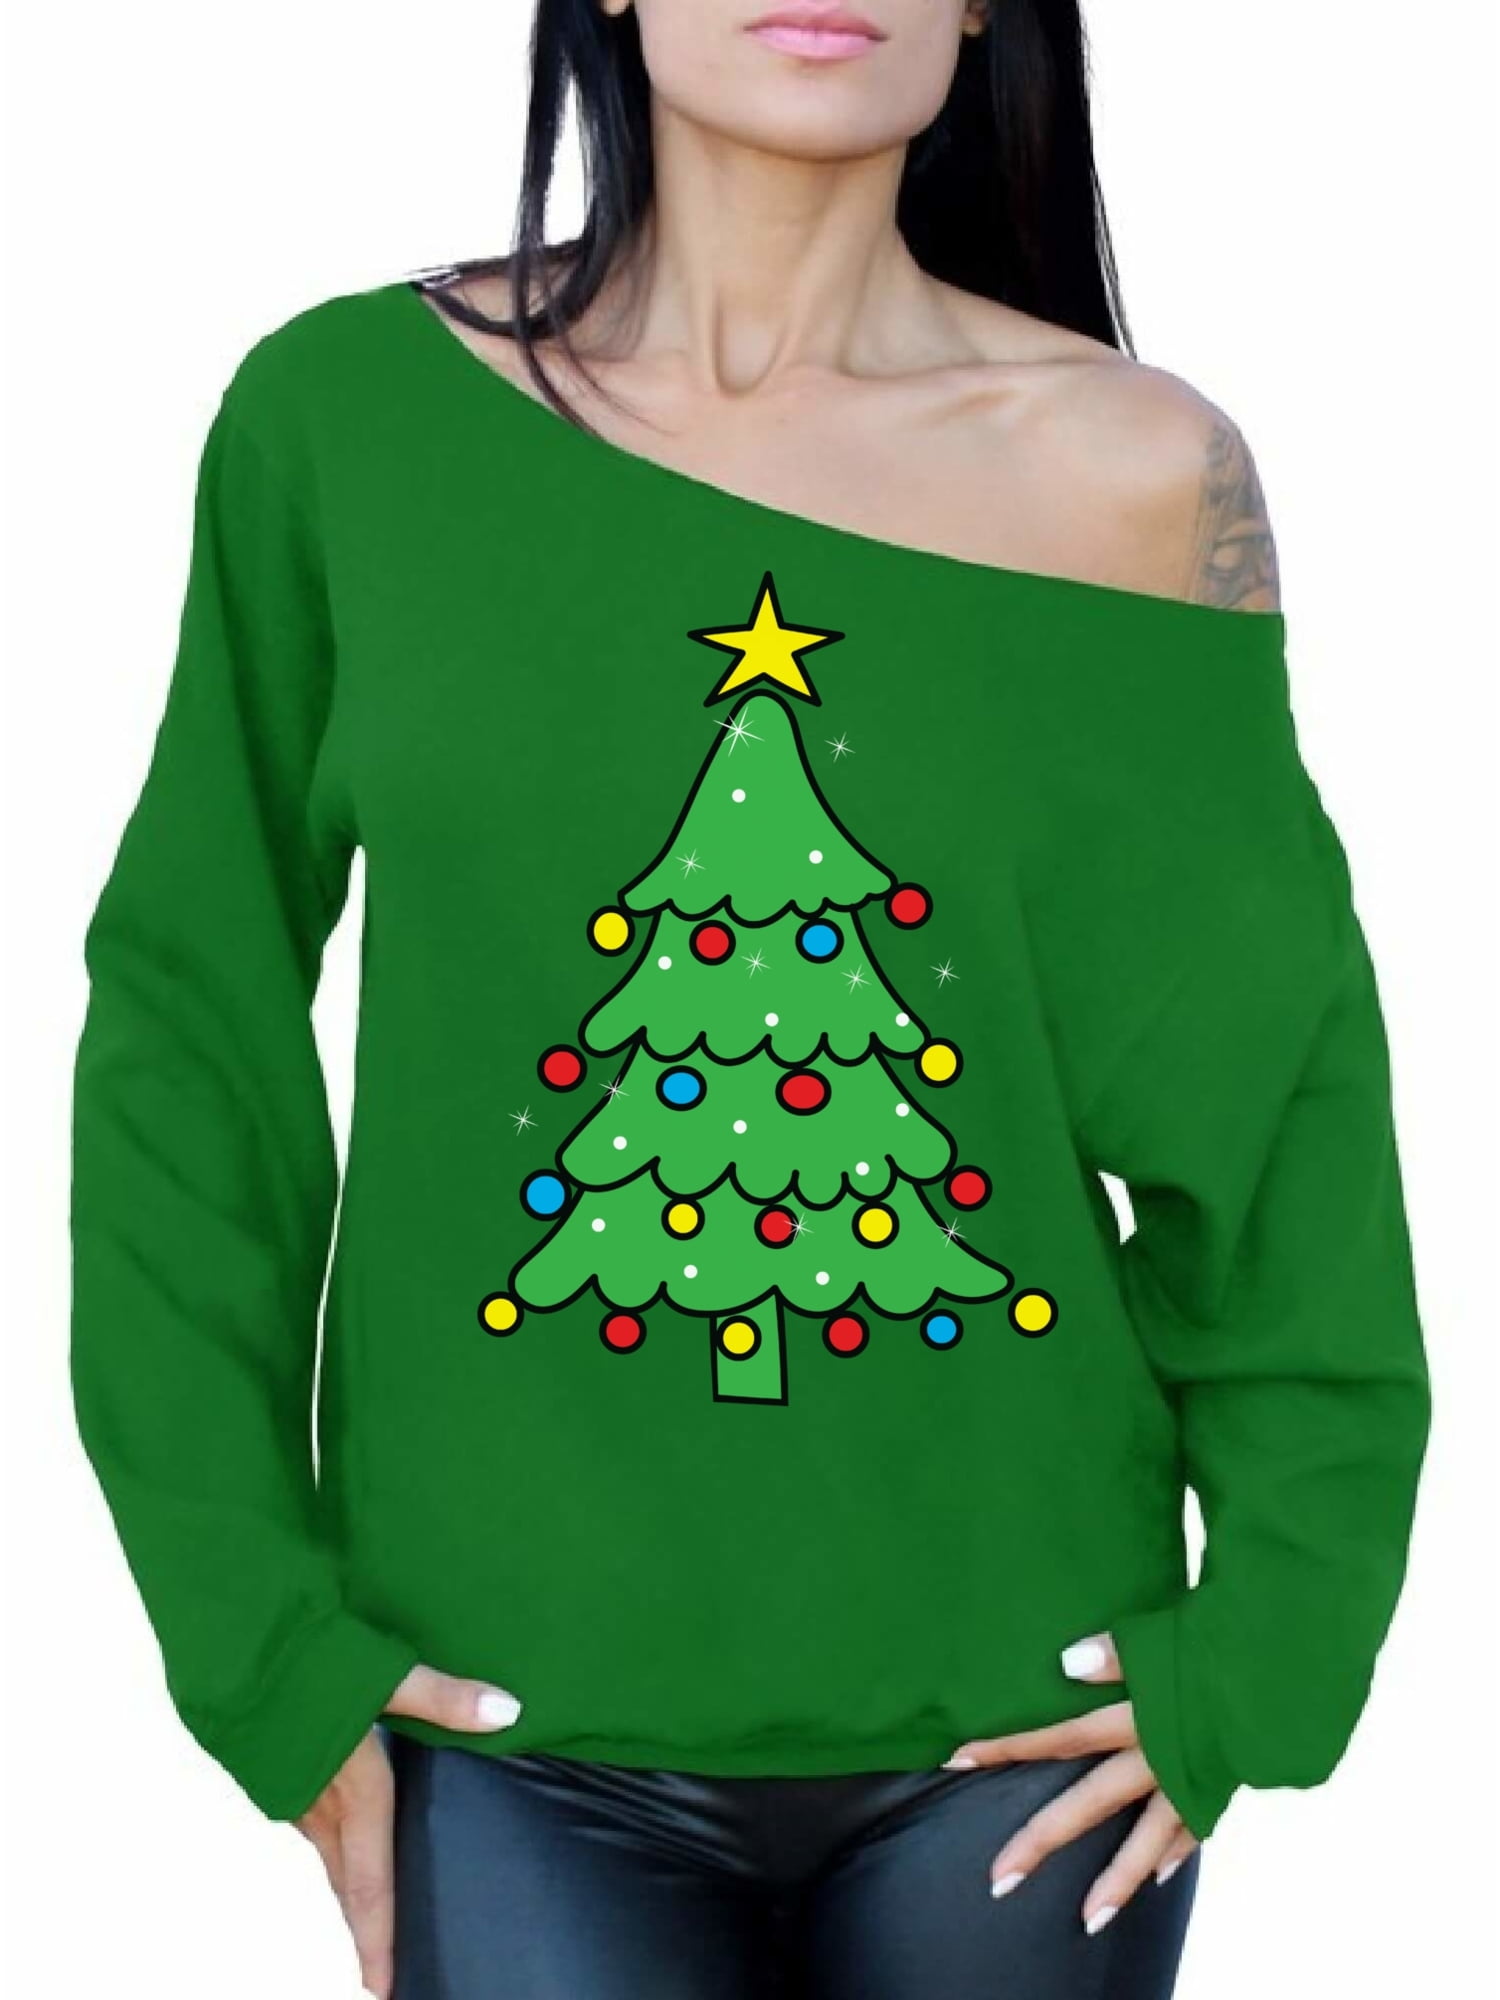 NPRADLA Women Christmas Santa Snowflake Printed Tops Off Shoulder Asymmetric Sweatshirt 